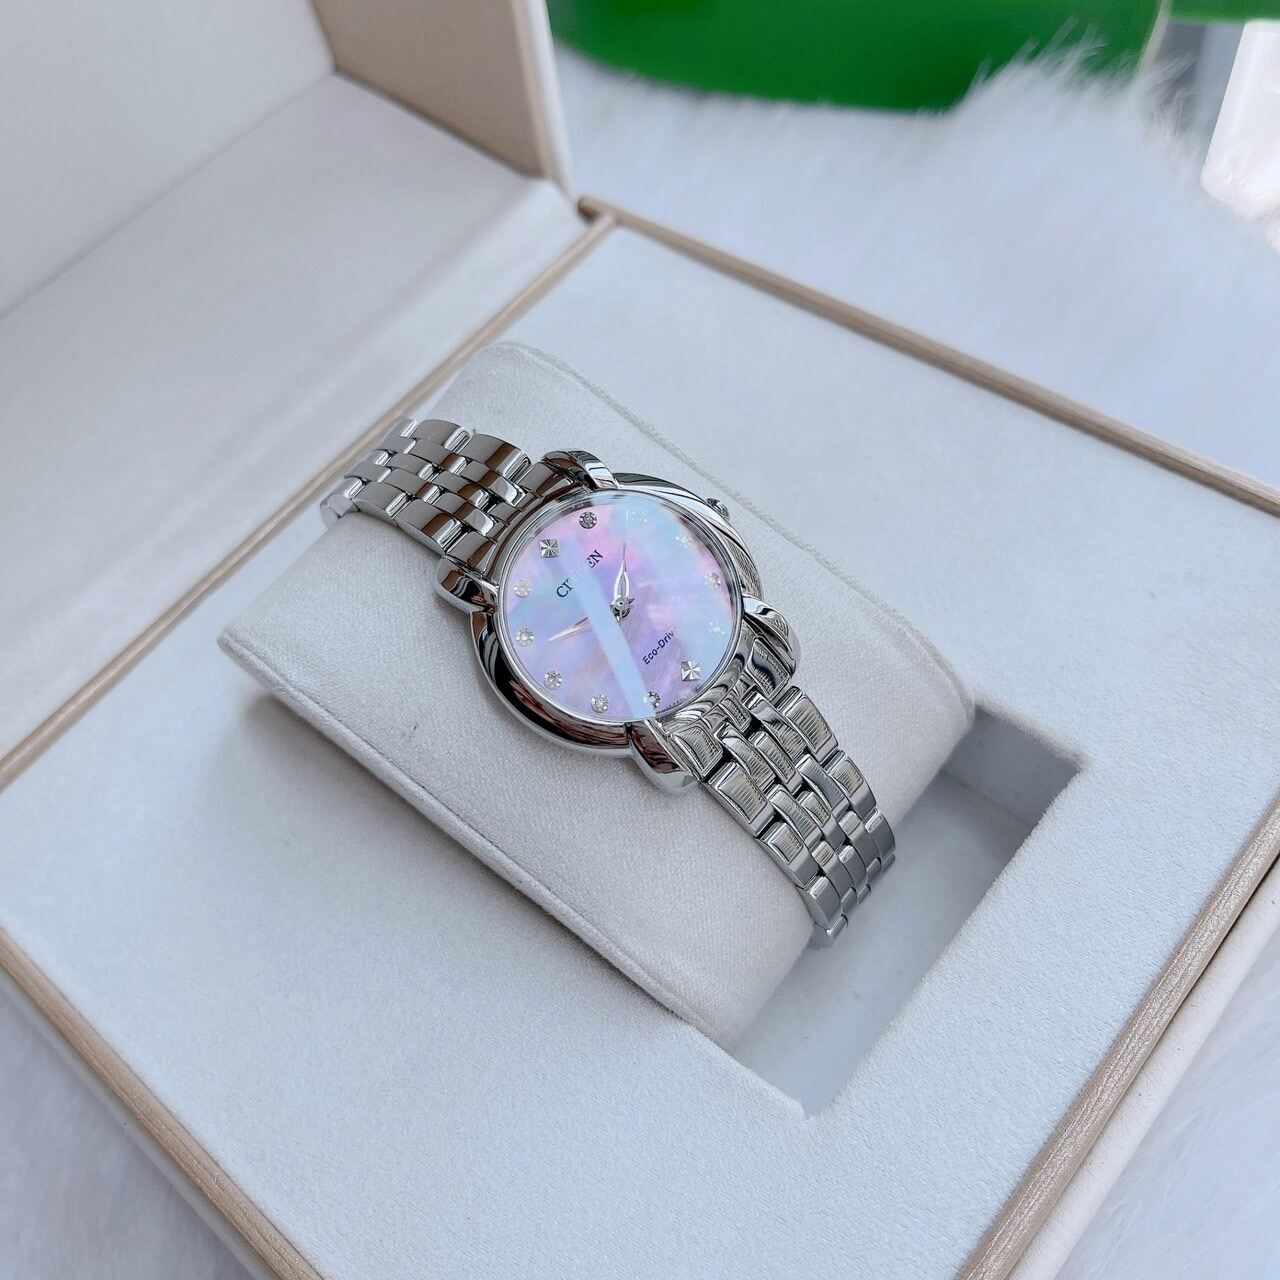 Đồng hồ nữ Citizen eco-drive Jolie pinky diamond watch EM